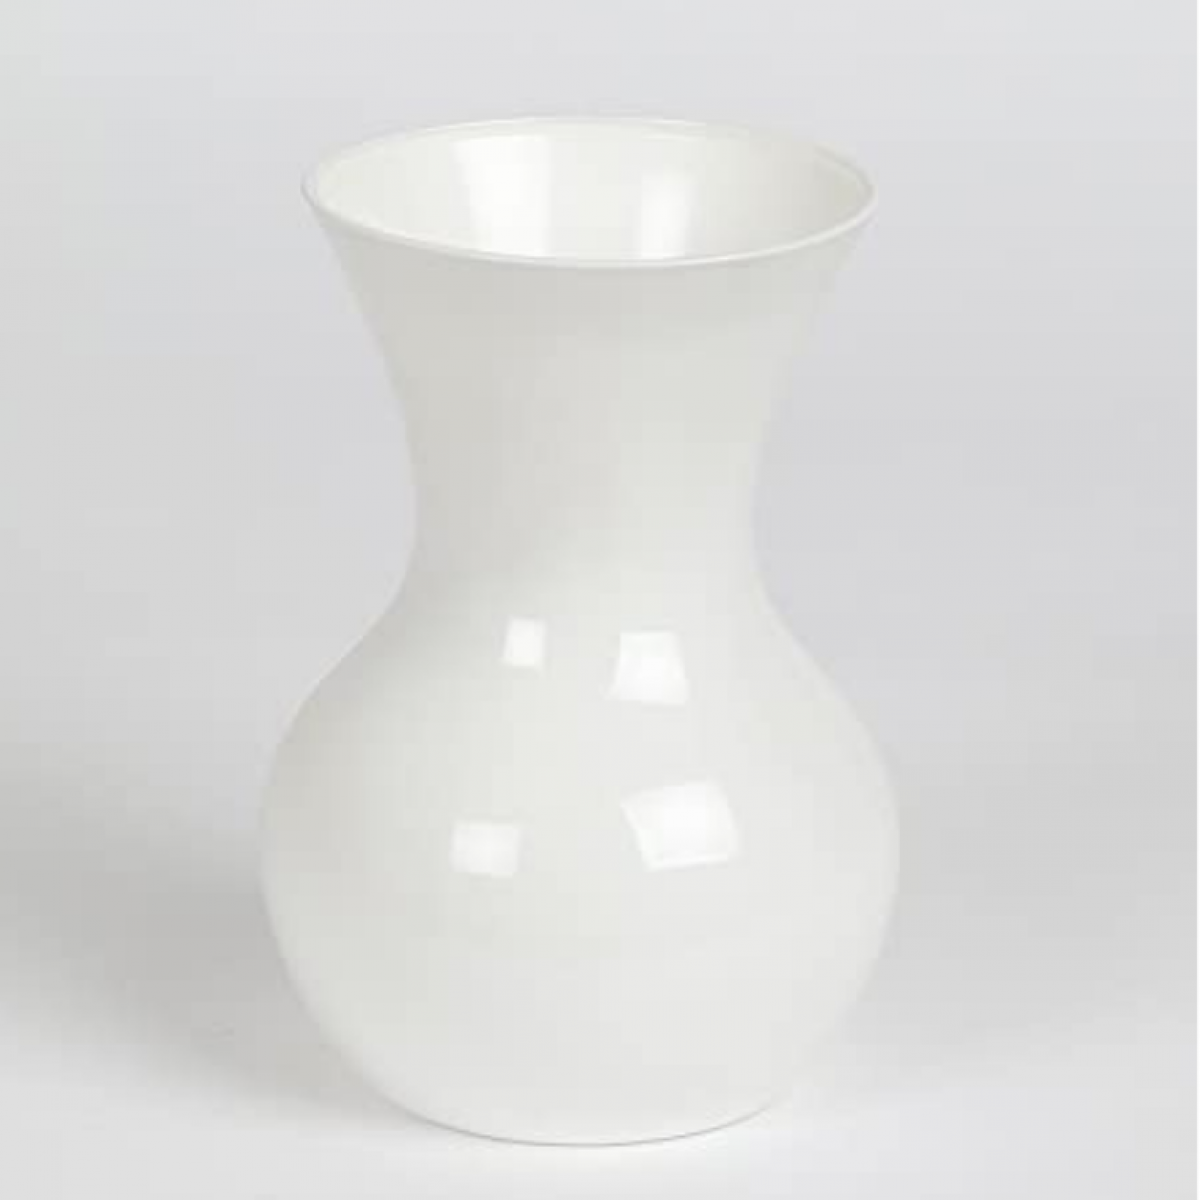 5102 Sweetheart White 11x18cm Acrylic Vase - 1 No